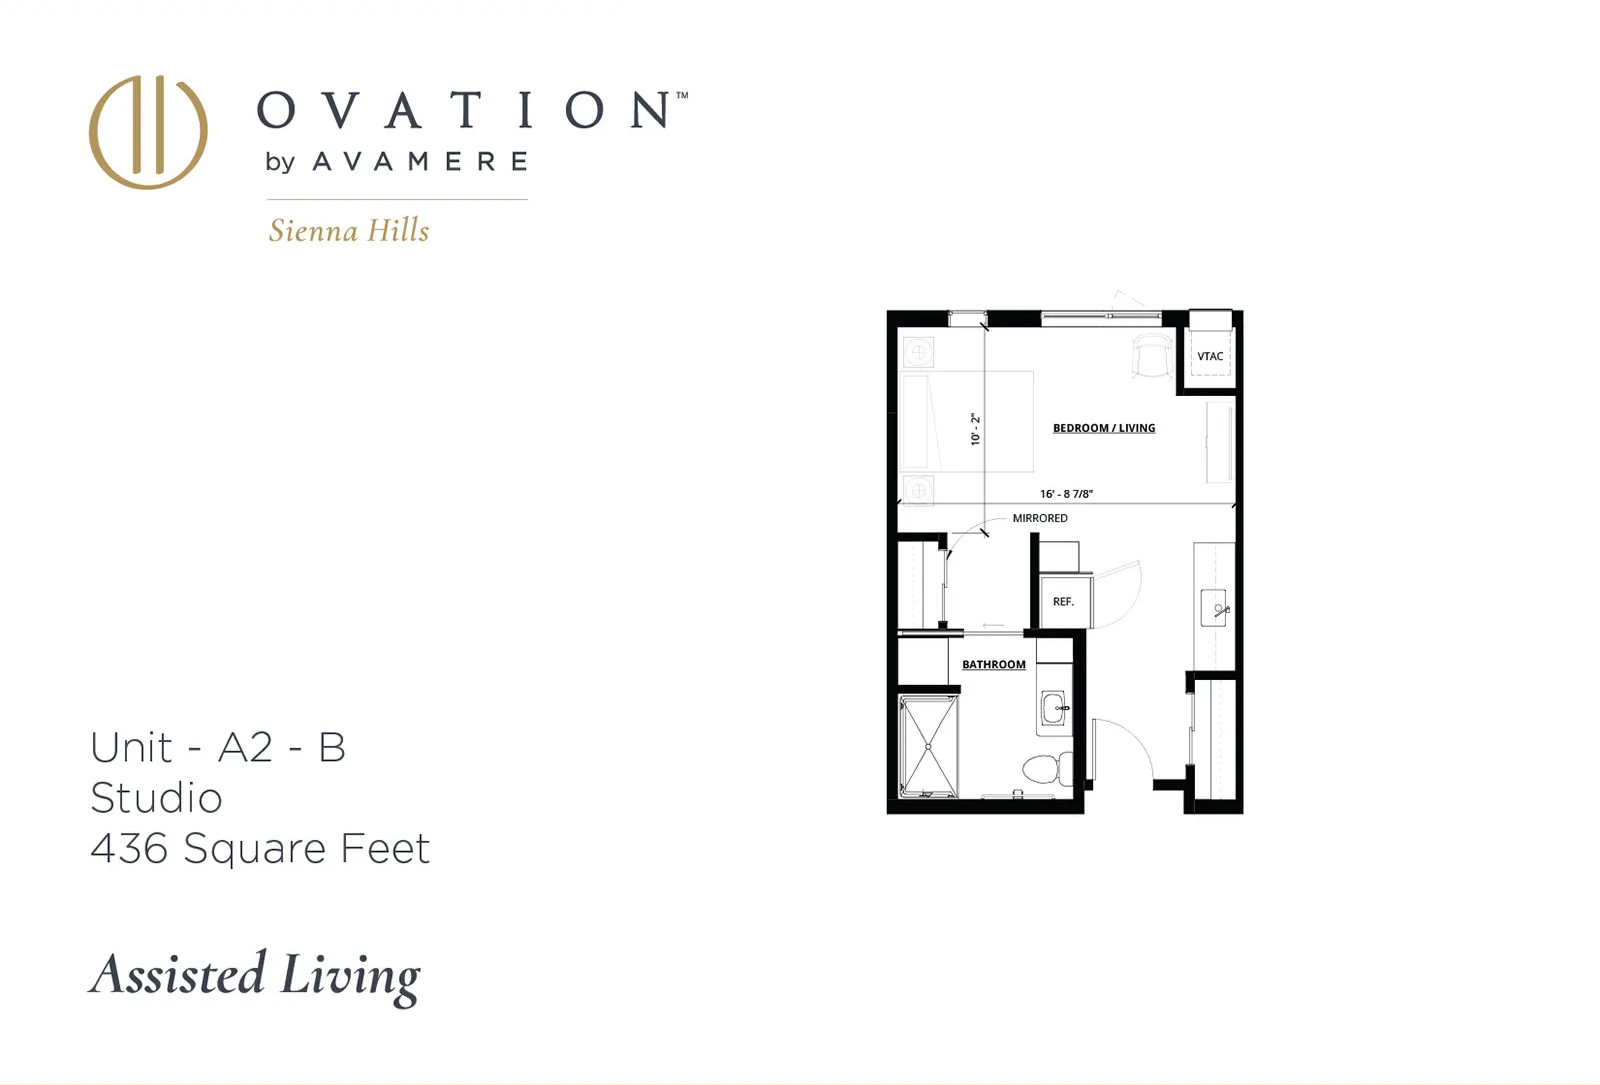 Ovation Sienna Hills Studio Floorplan 436 sq ft